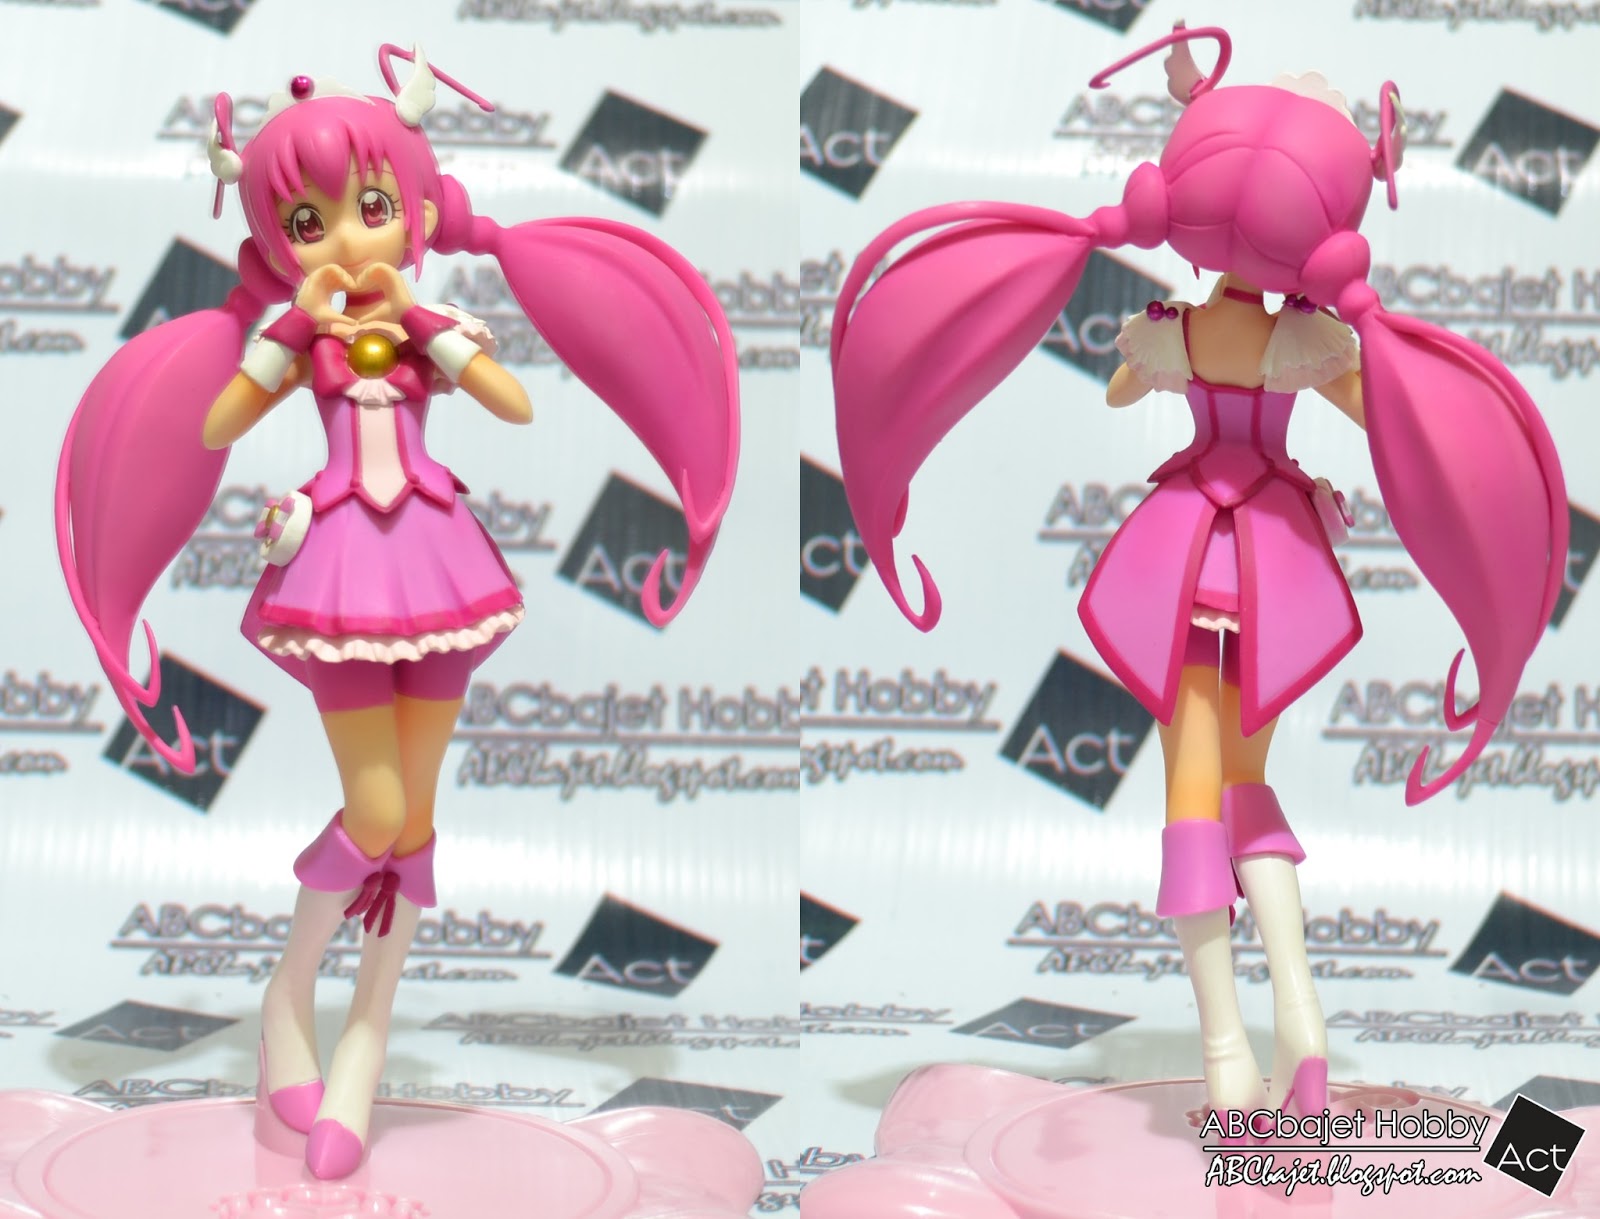 Glitter Force Figurine - Smile Precure DX Girls Figure Special Ver